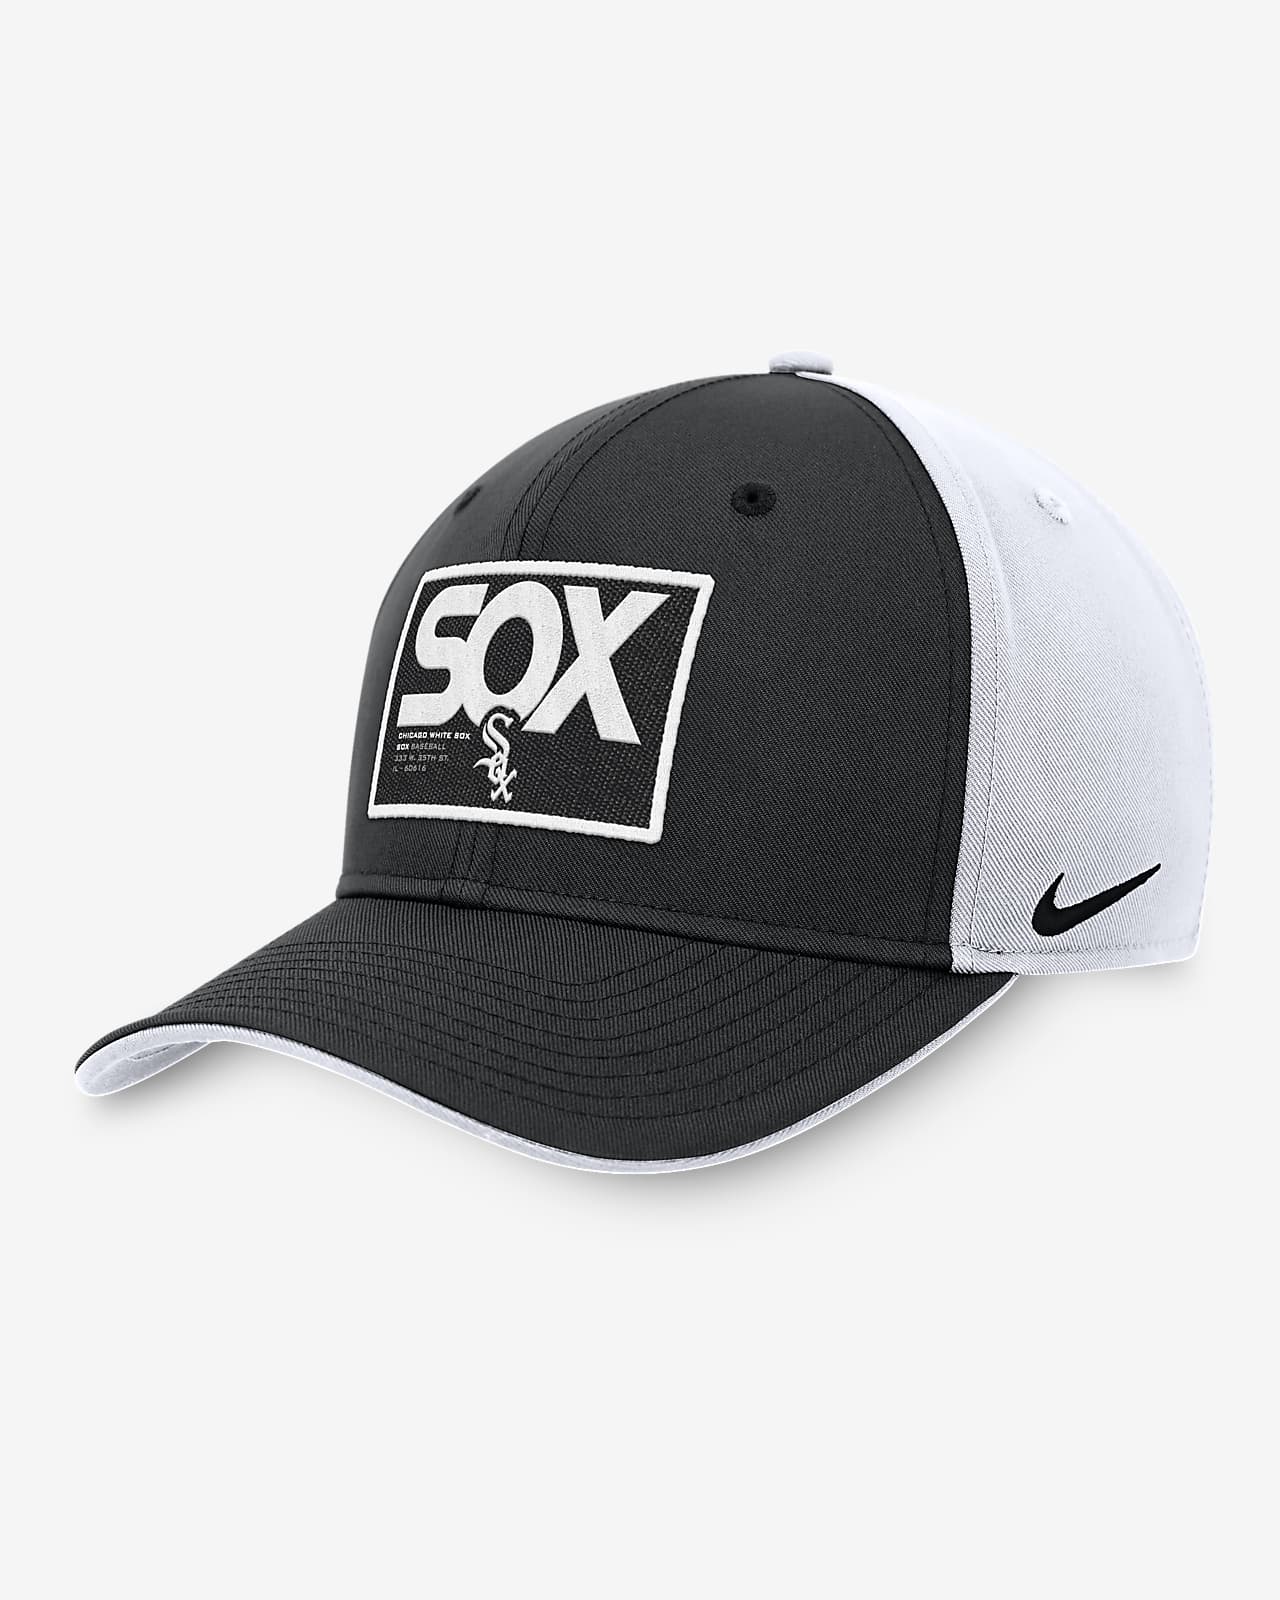 Boston Red Sox Team Nike MLB Genuine Merchandise Baseball Cap Trucker Hat 1  Size